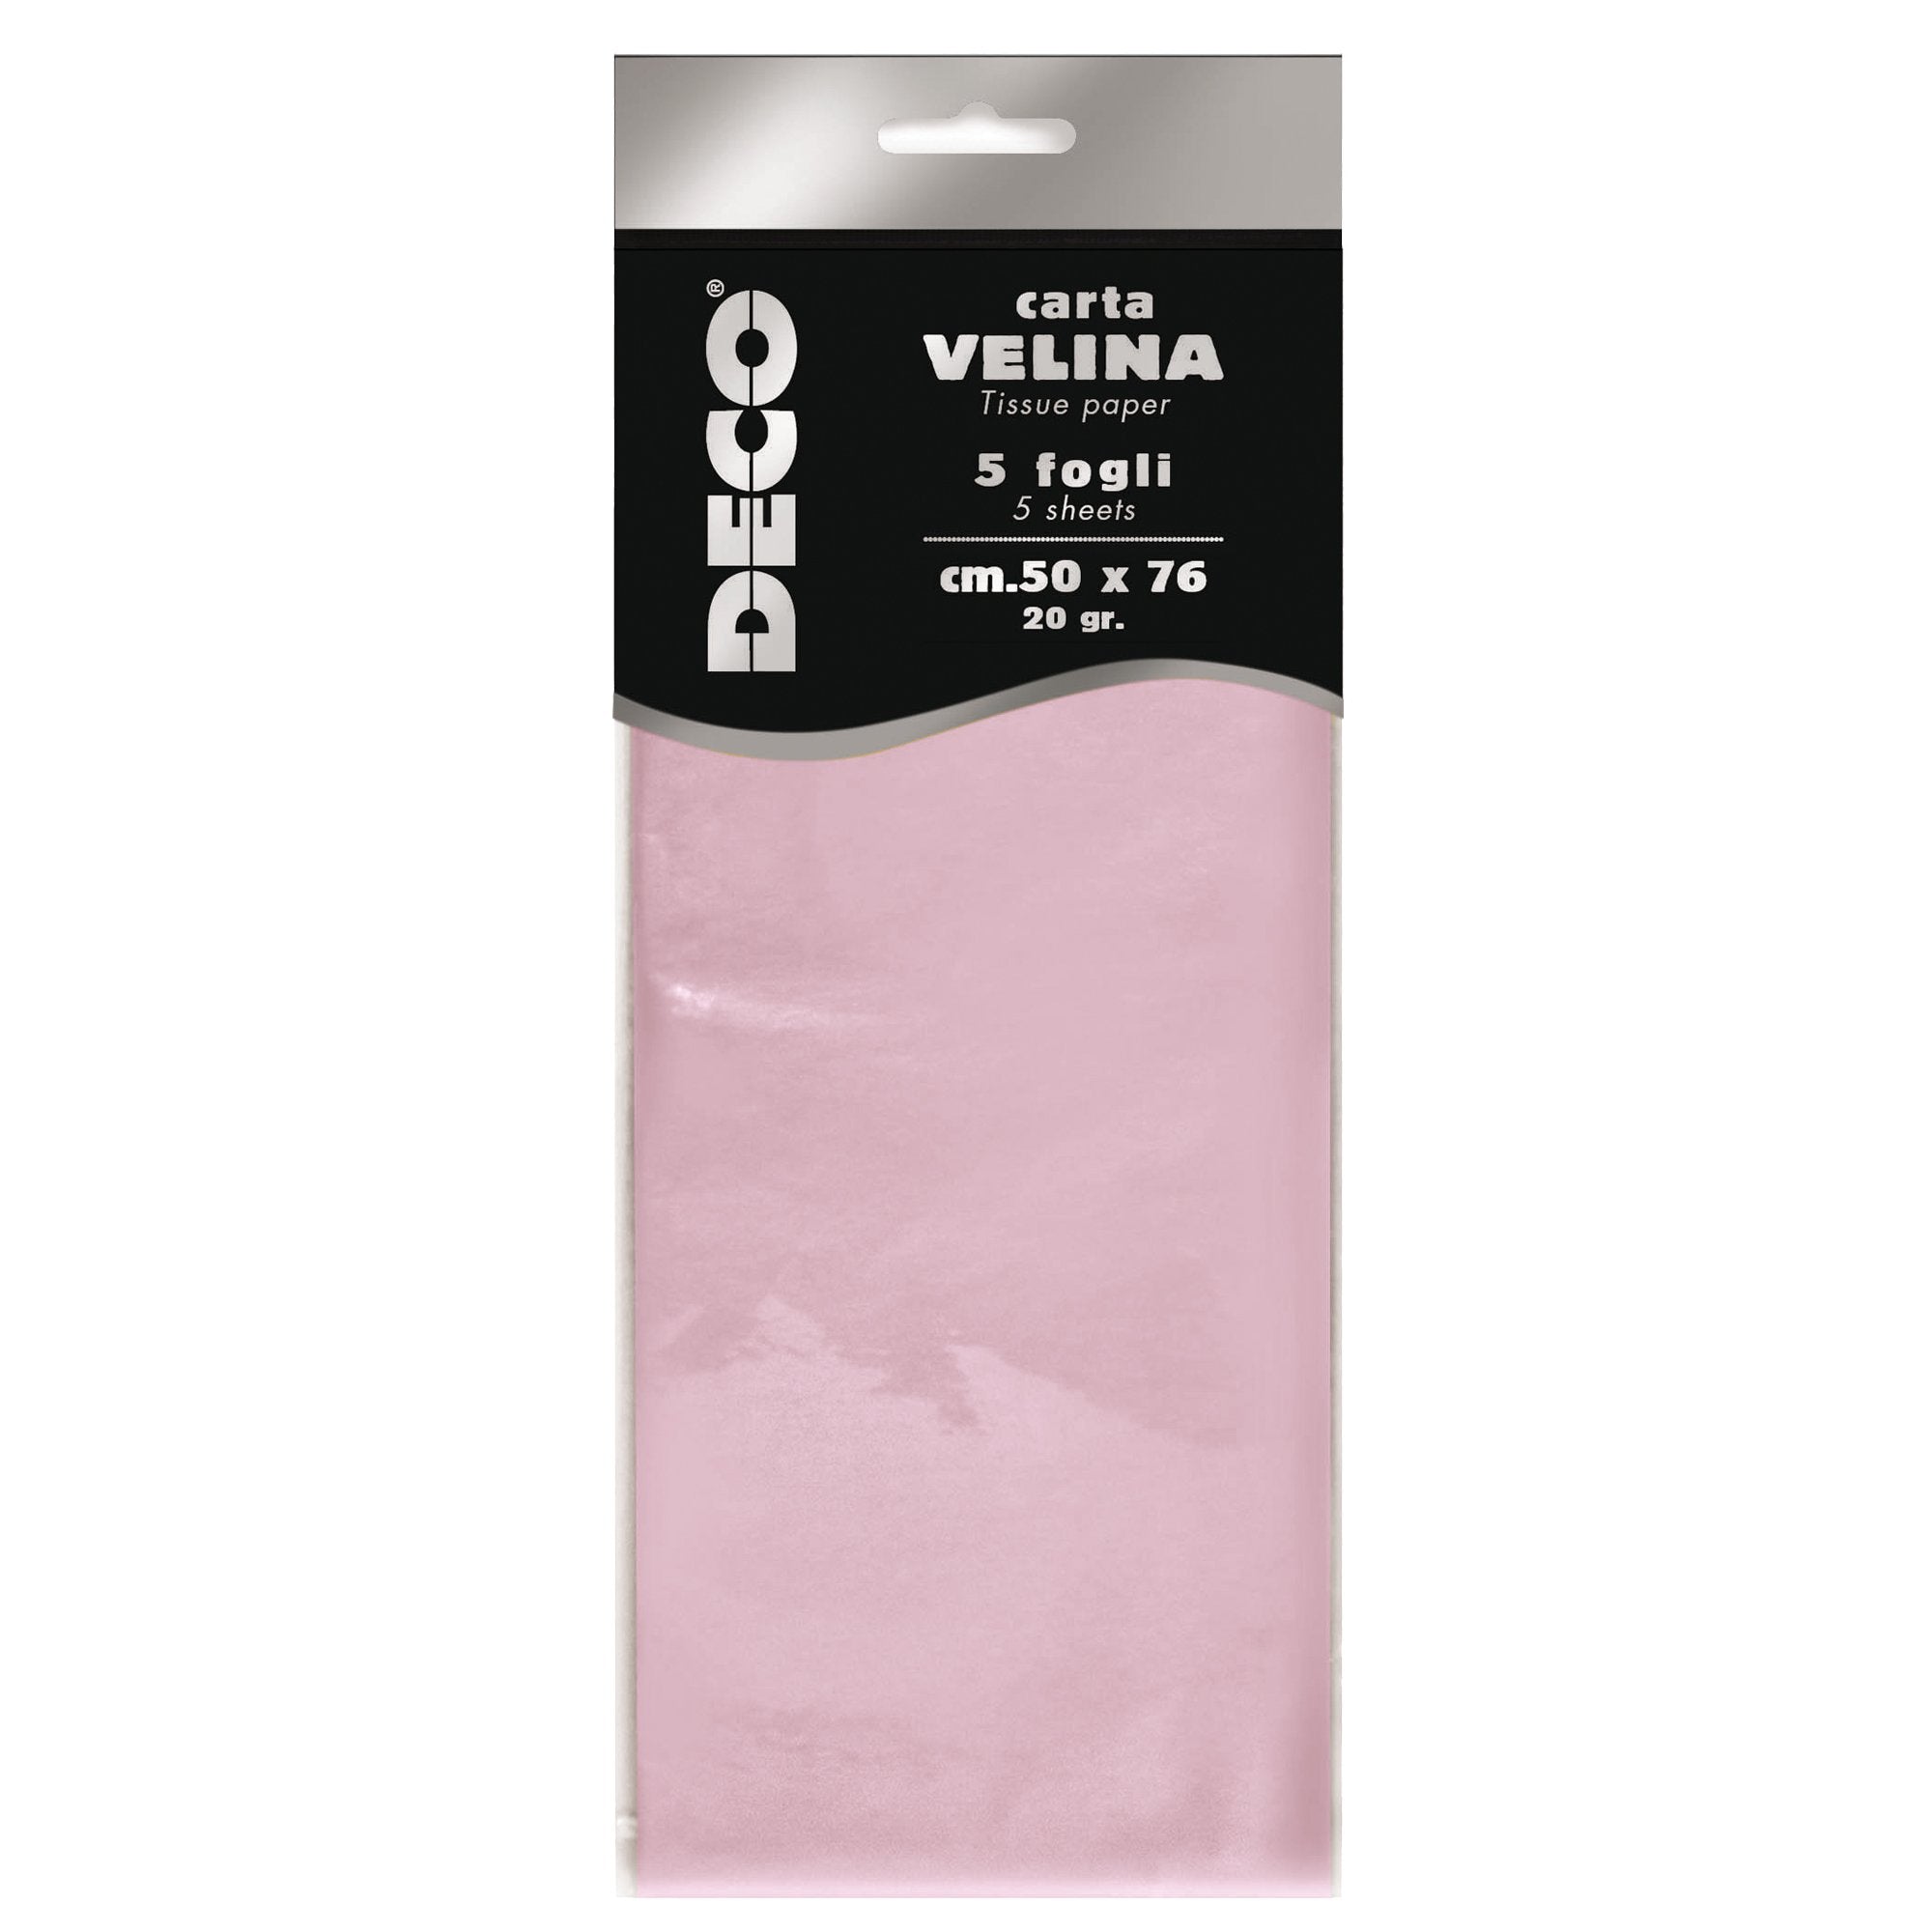 deco-busta-5-fogli-carta-velina-20gr-50x76cm-rosa